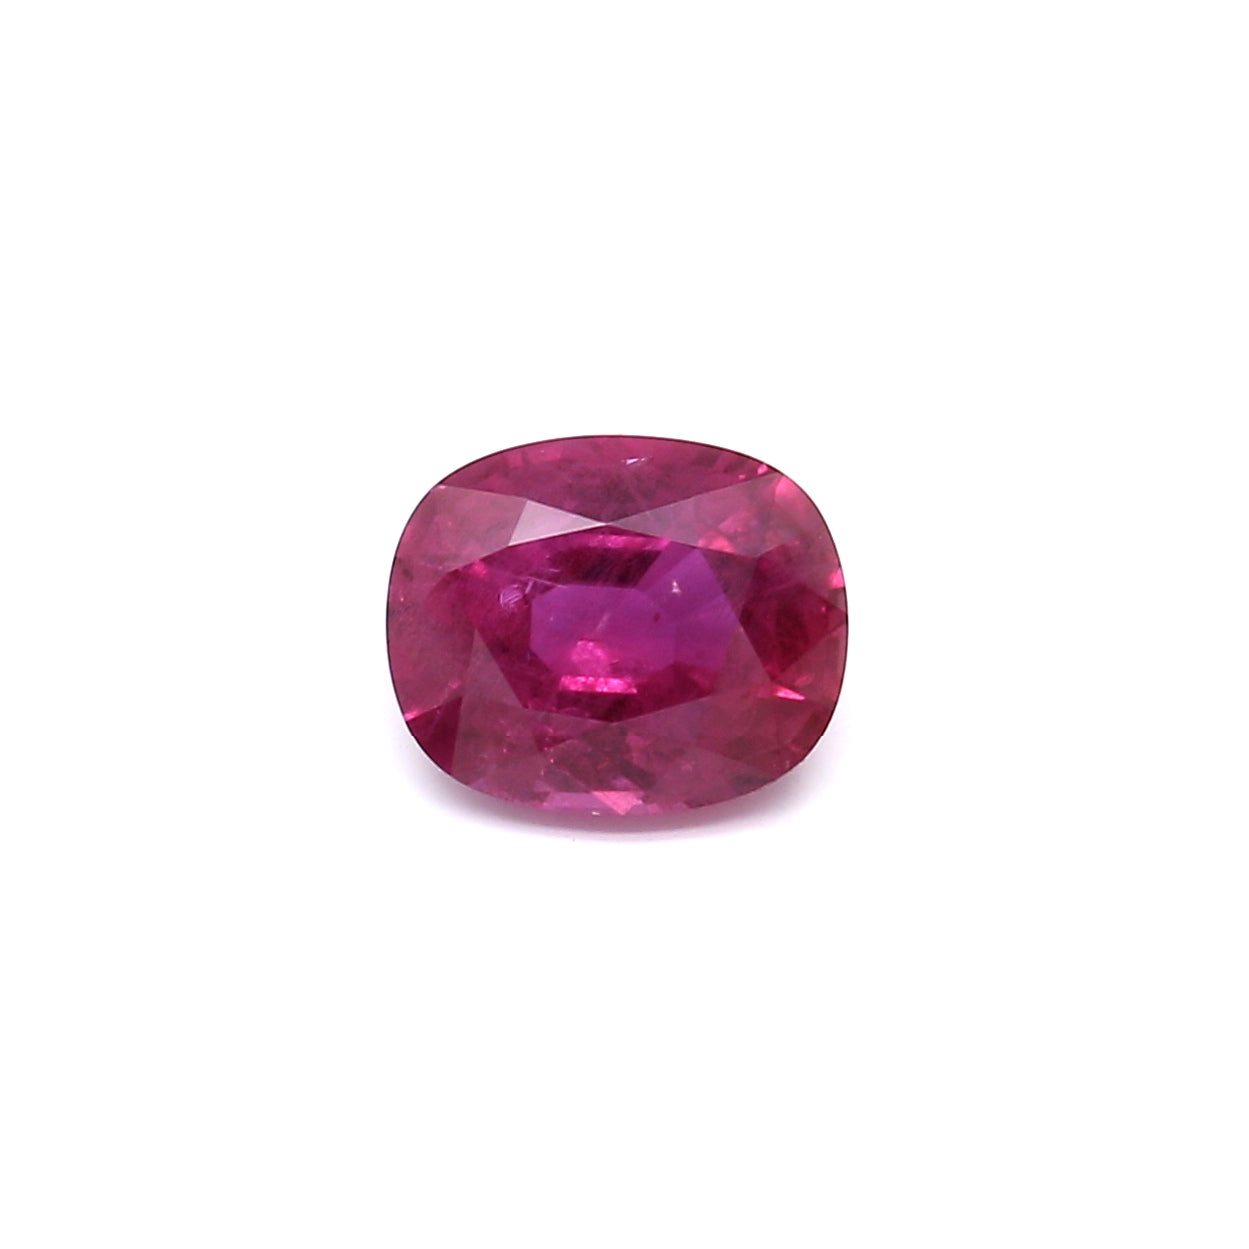 2.00ct Purplish Pink, Cushion Sapphire, H(b), Thailand - 8.11 x 6.70 x 4.13mm